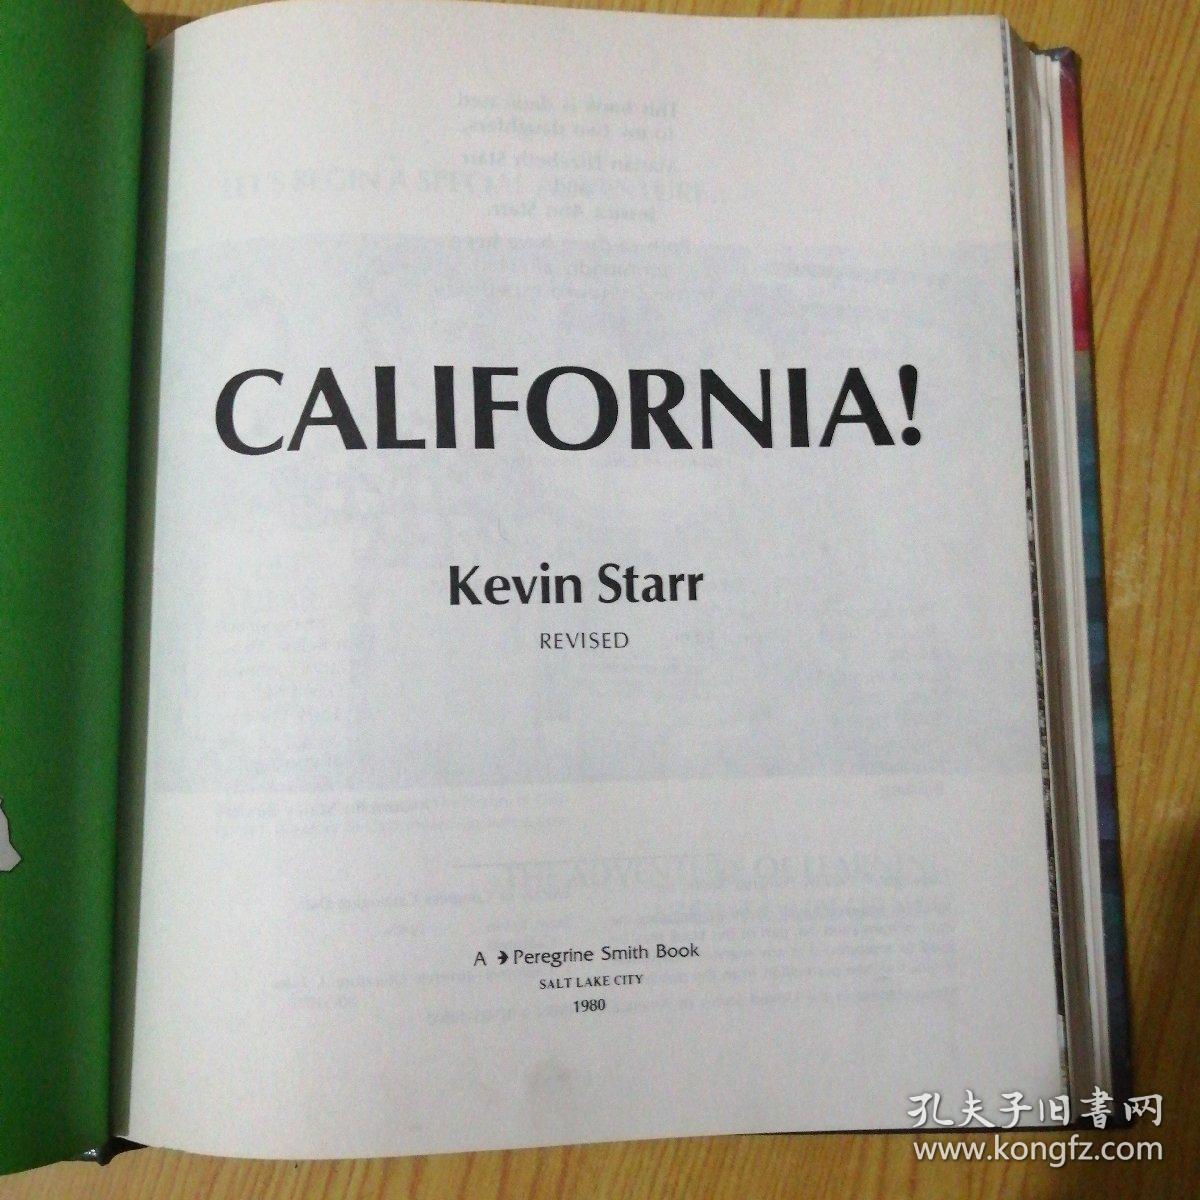 CALIFORNIA! Kevin Starr